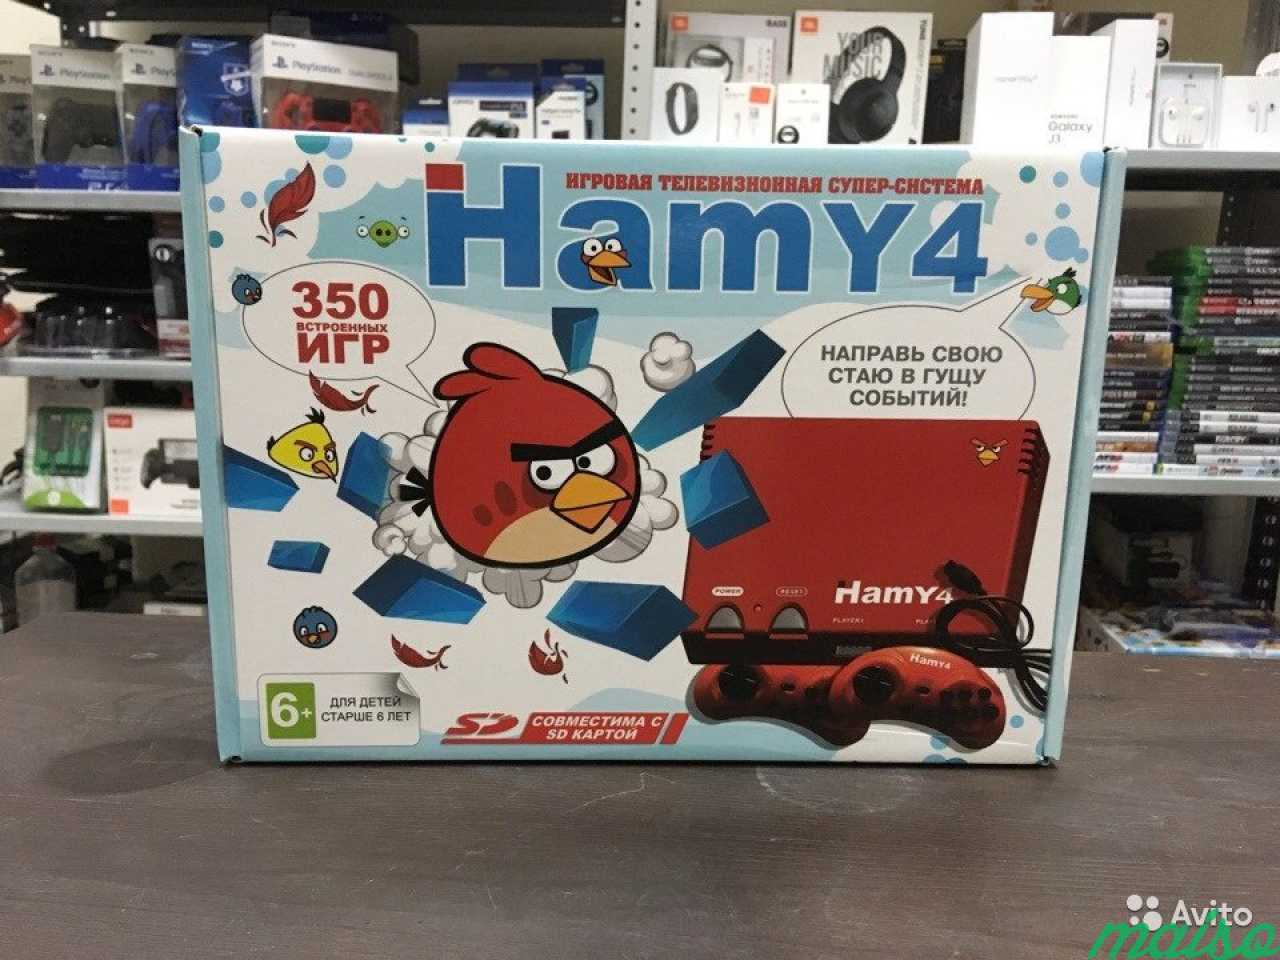 Приставка Sega - Dendy Hamy 4 (350-в-1) Angry в Санкт-Петербурге. Фото 1